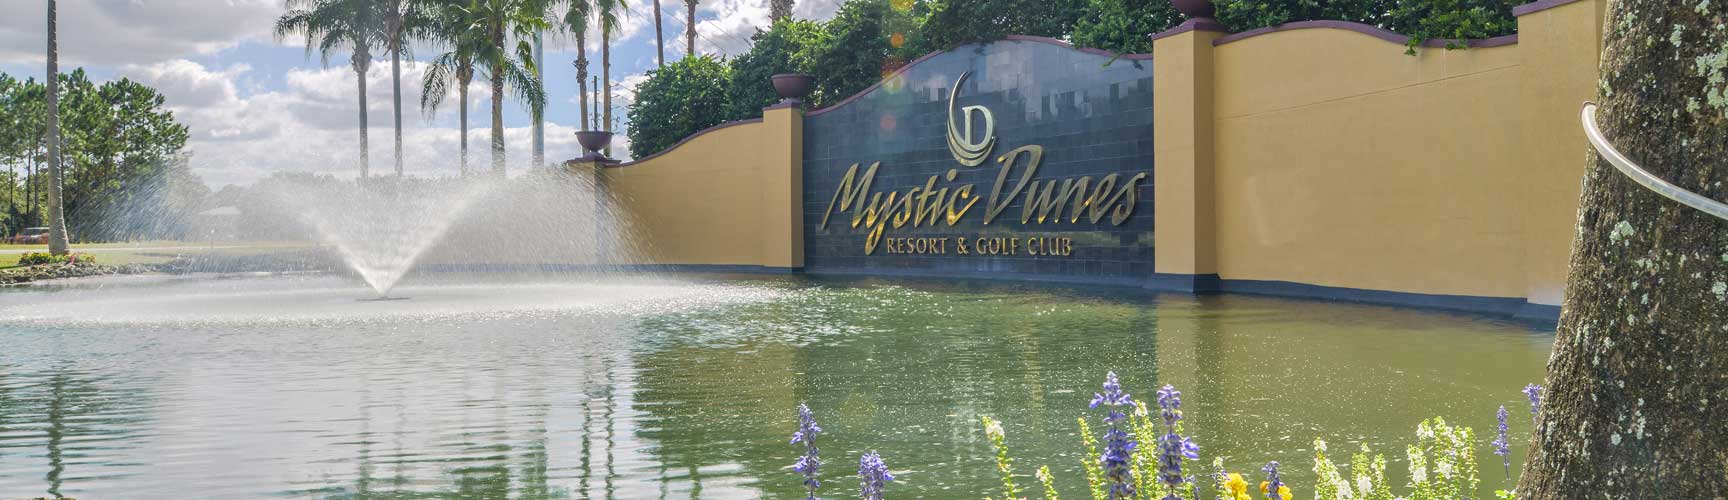 Budget and family friendly Mystic Dunes Resort & Golf Club near Walt Disney World.